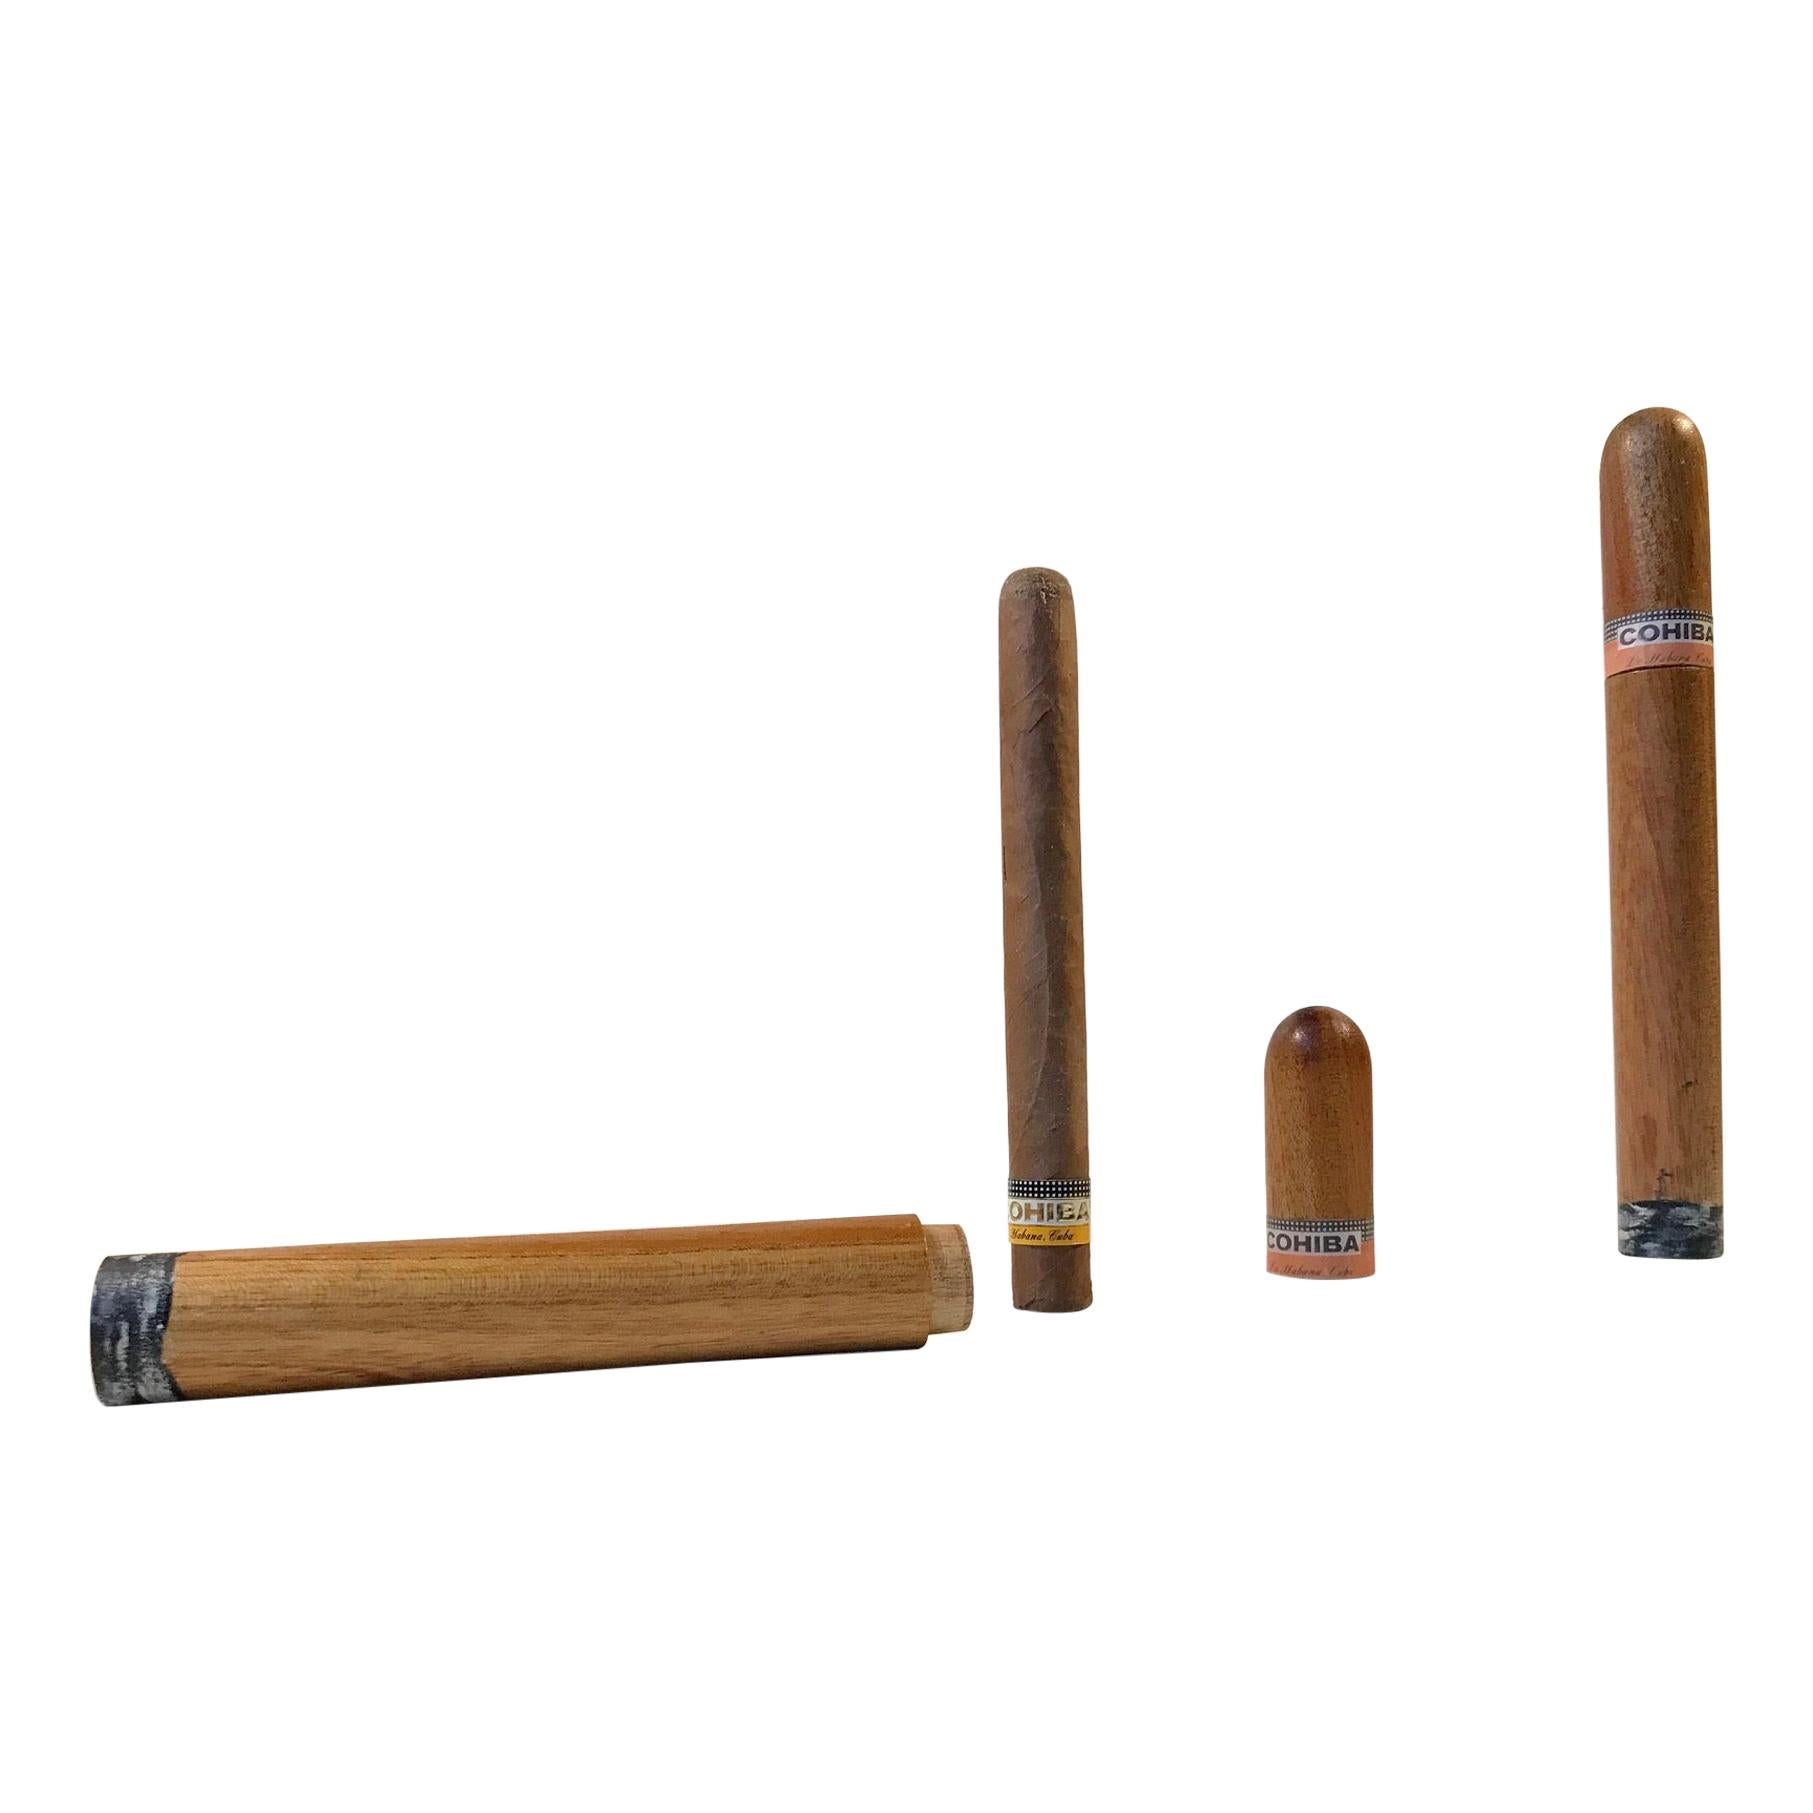 Vintage Wooden Cohiba Cigar Tubes, 1960s